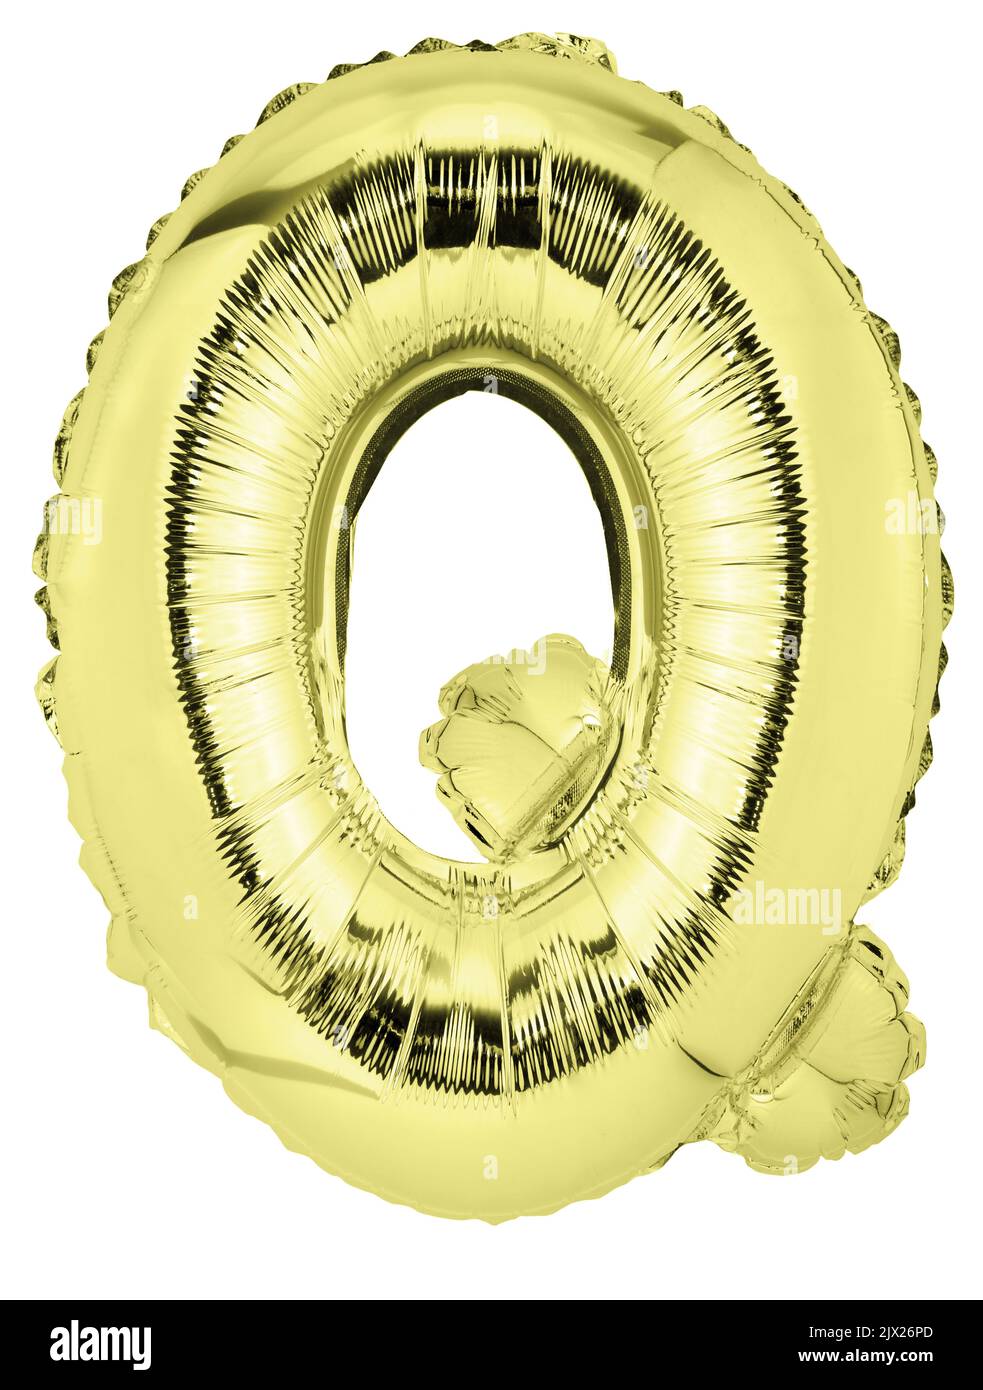 Letter Q in golden mylar balloon isolated on white Stock Photo